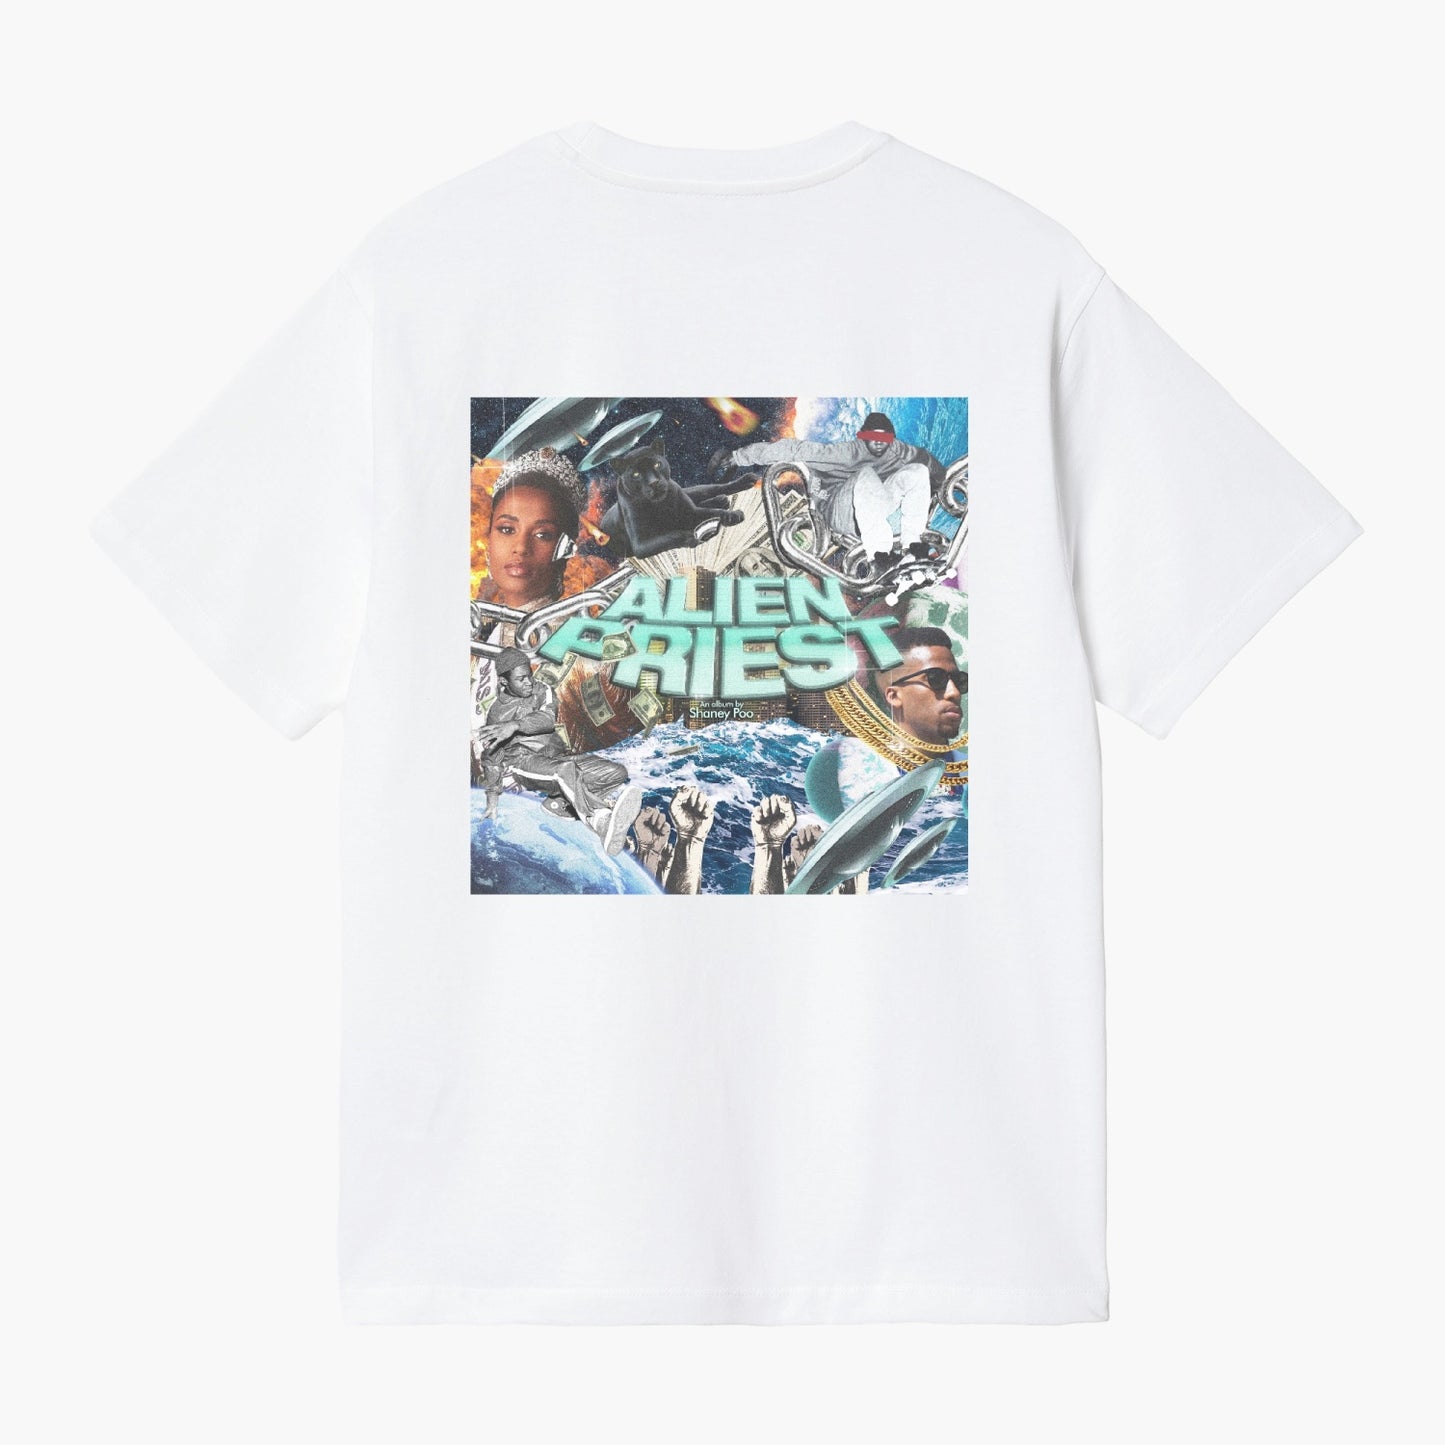 3. Alien Priest T-shirt